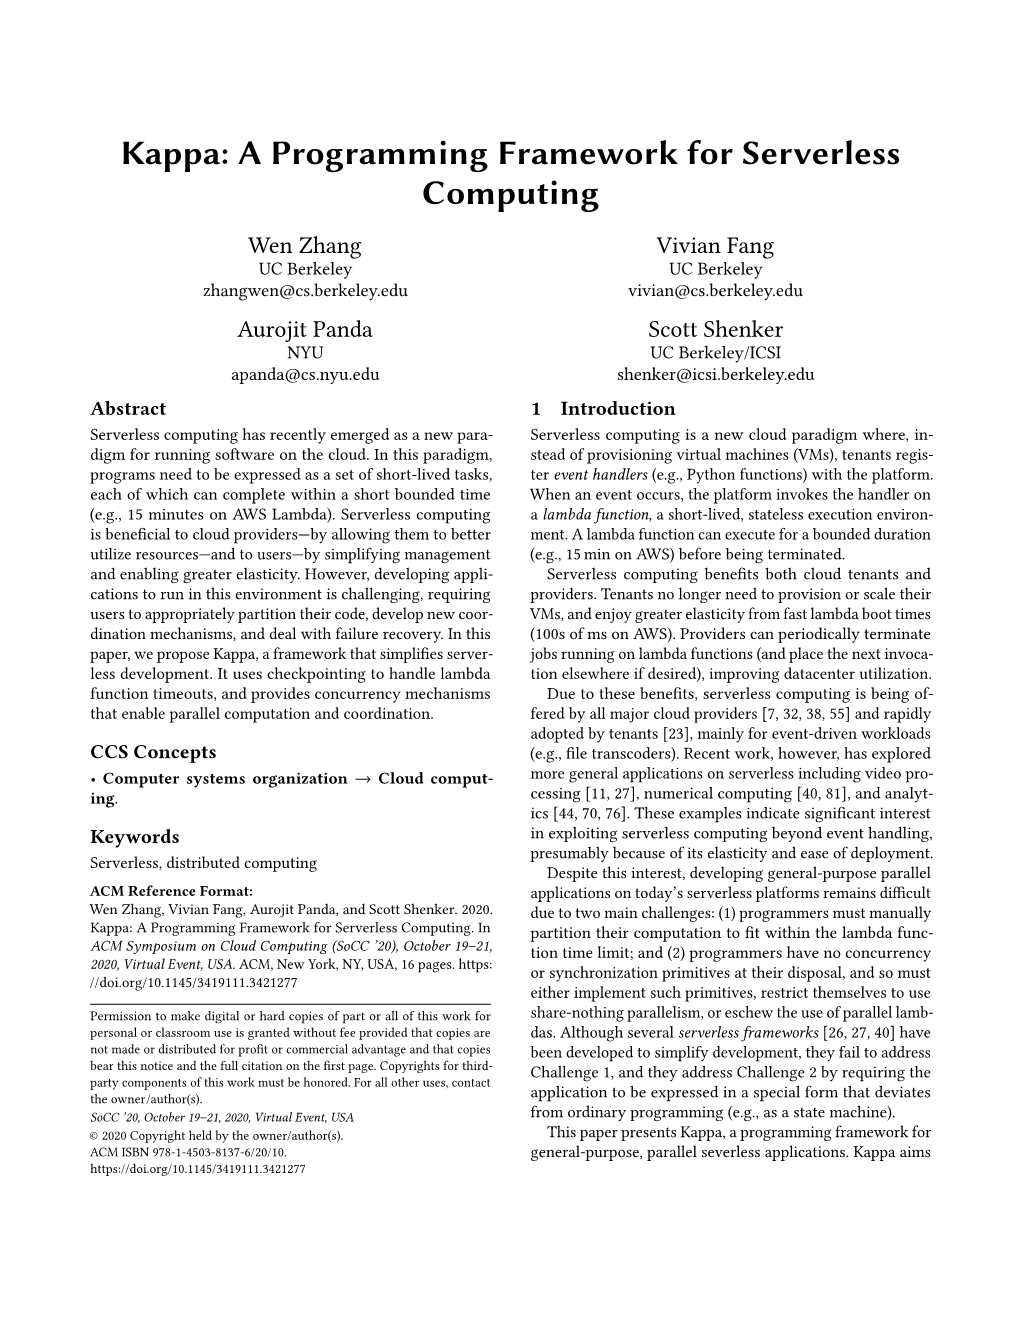 Kappa: a Programming Framework for Serverless Computing